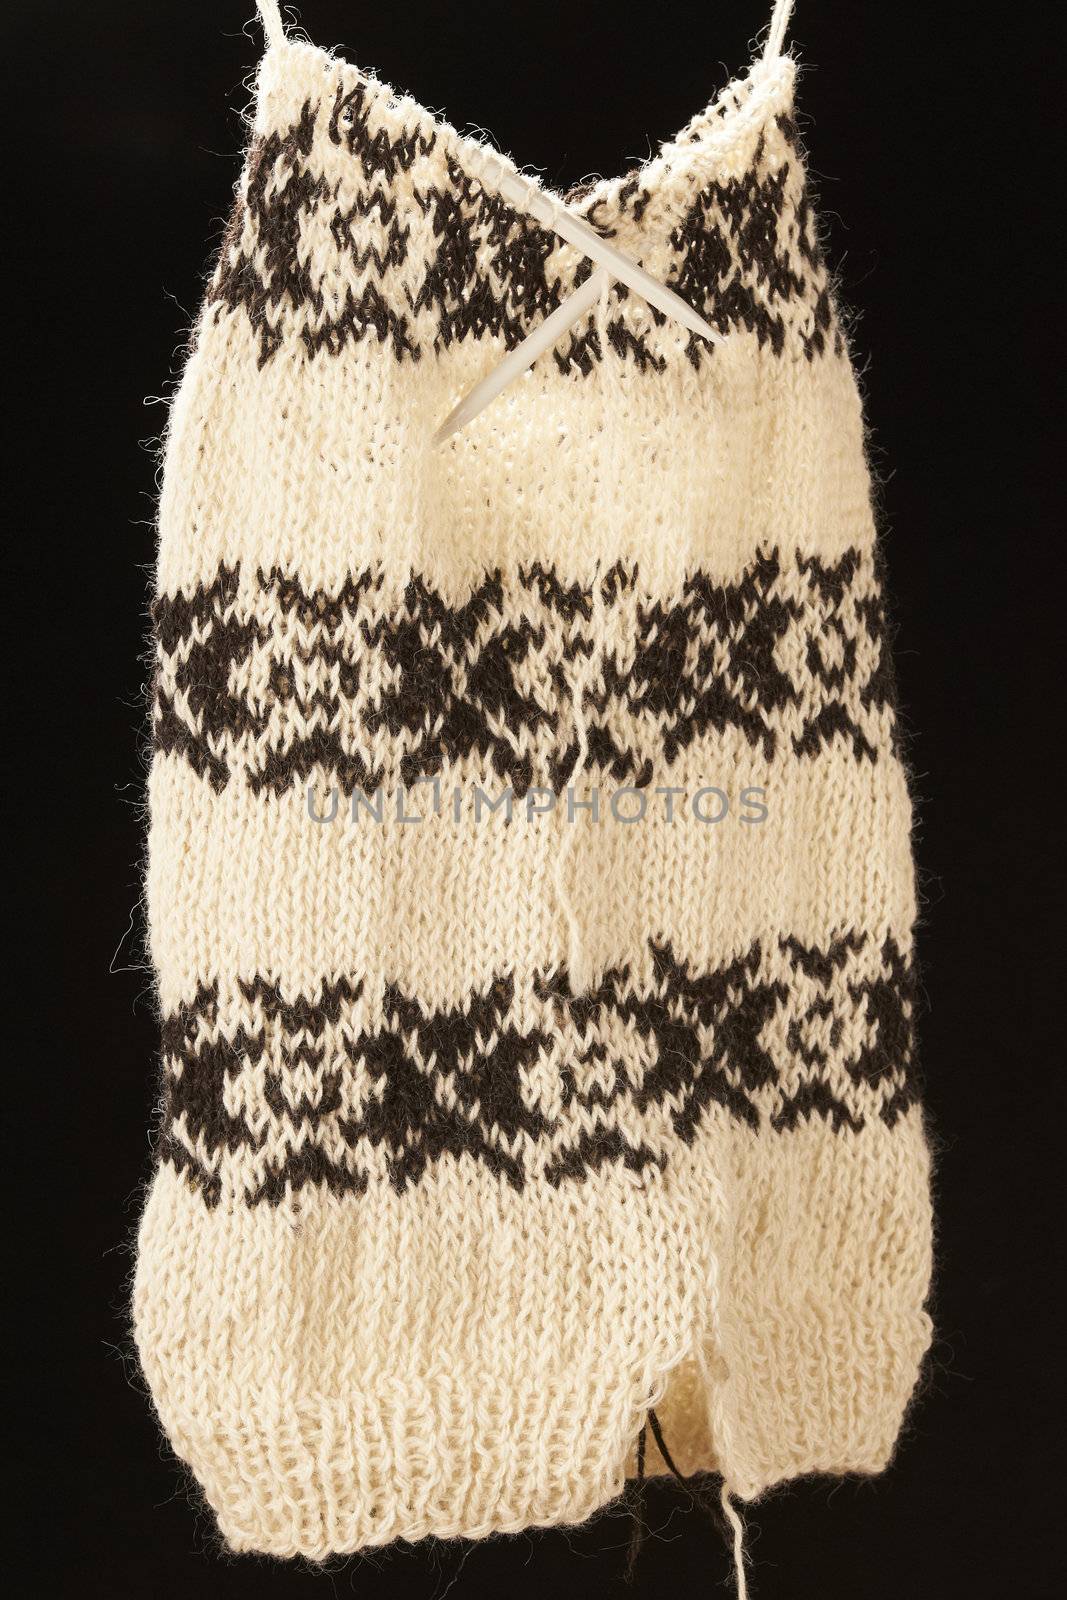 Knitted sweater by Eydfinnur